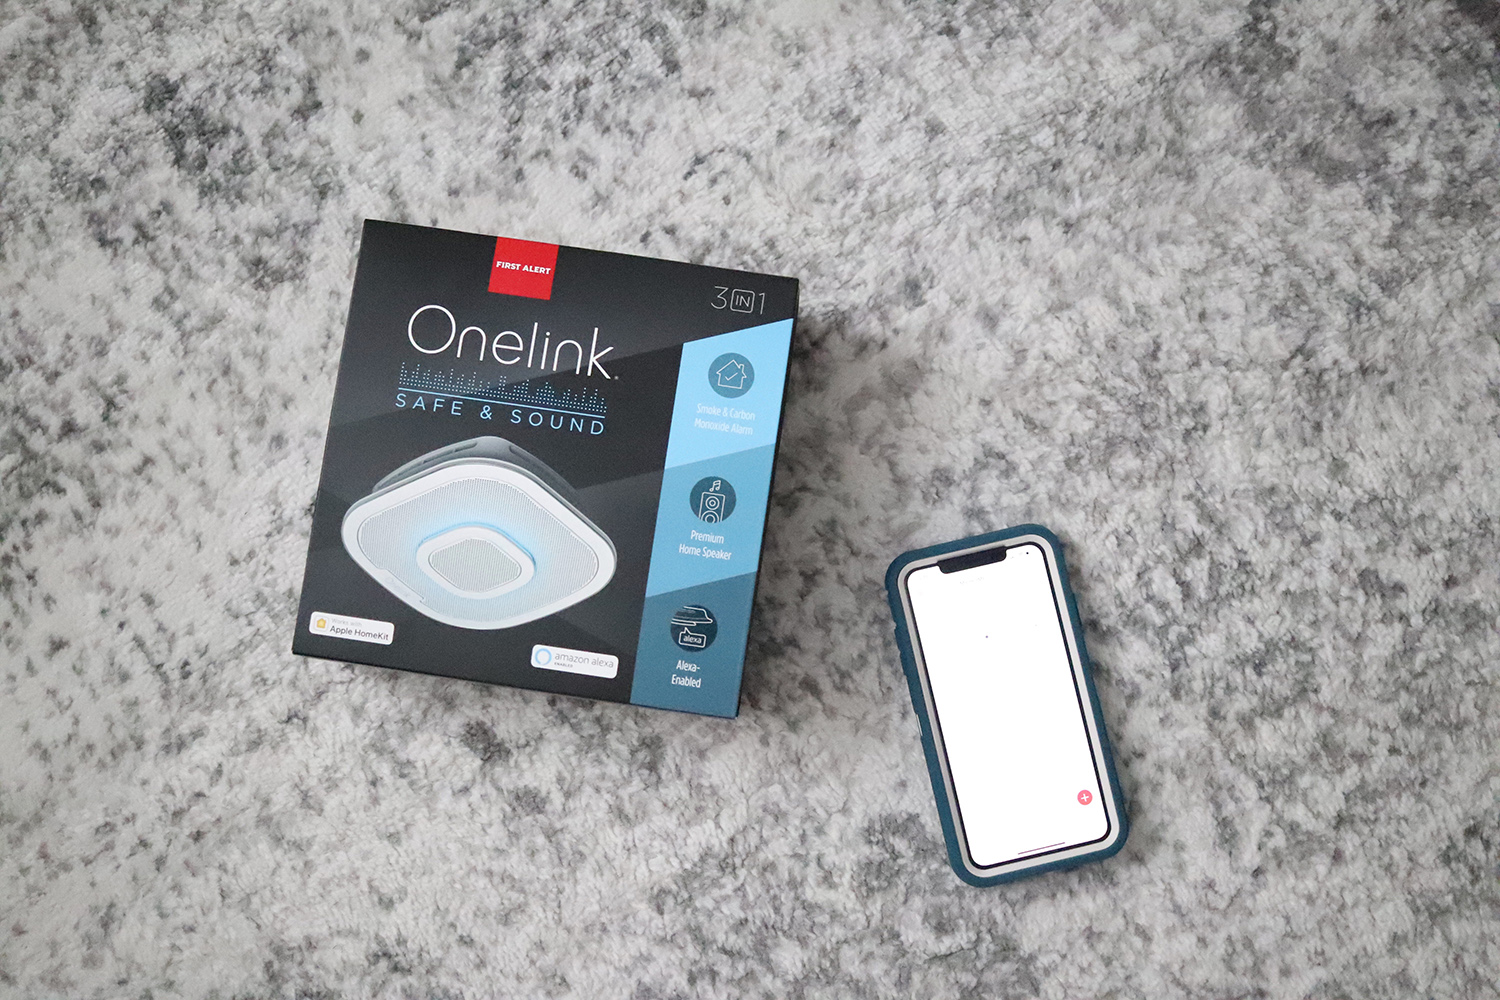 onelink safe & sound for your smart home